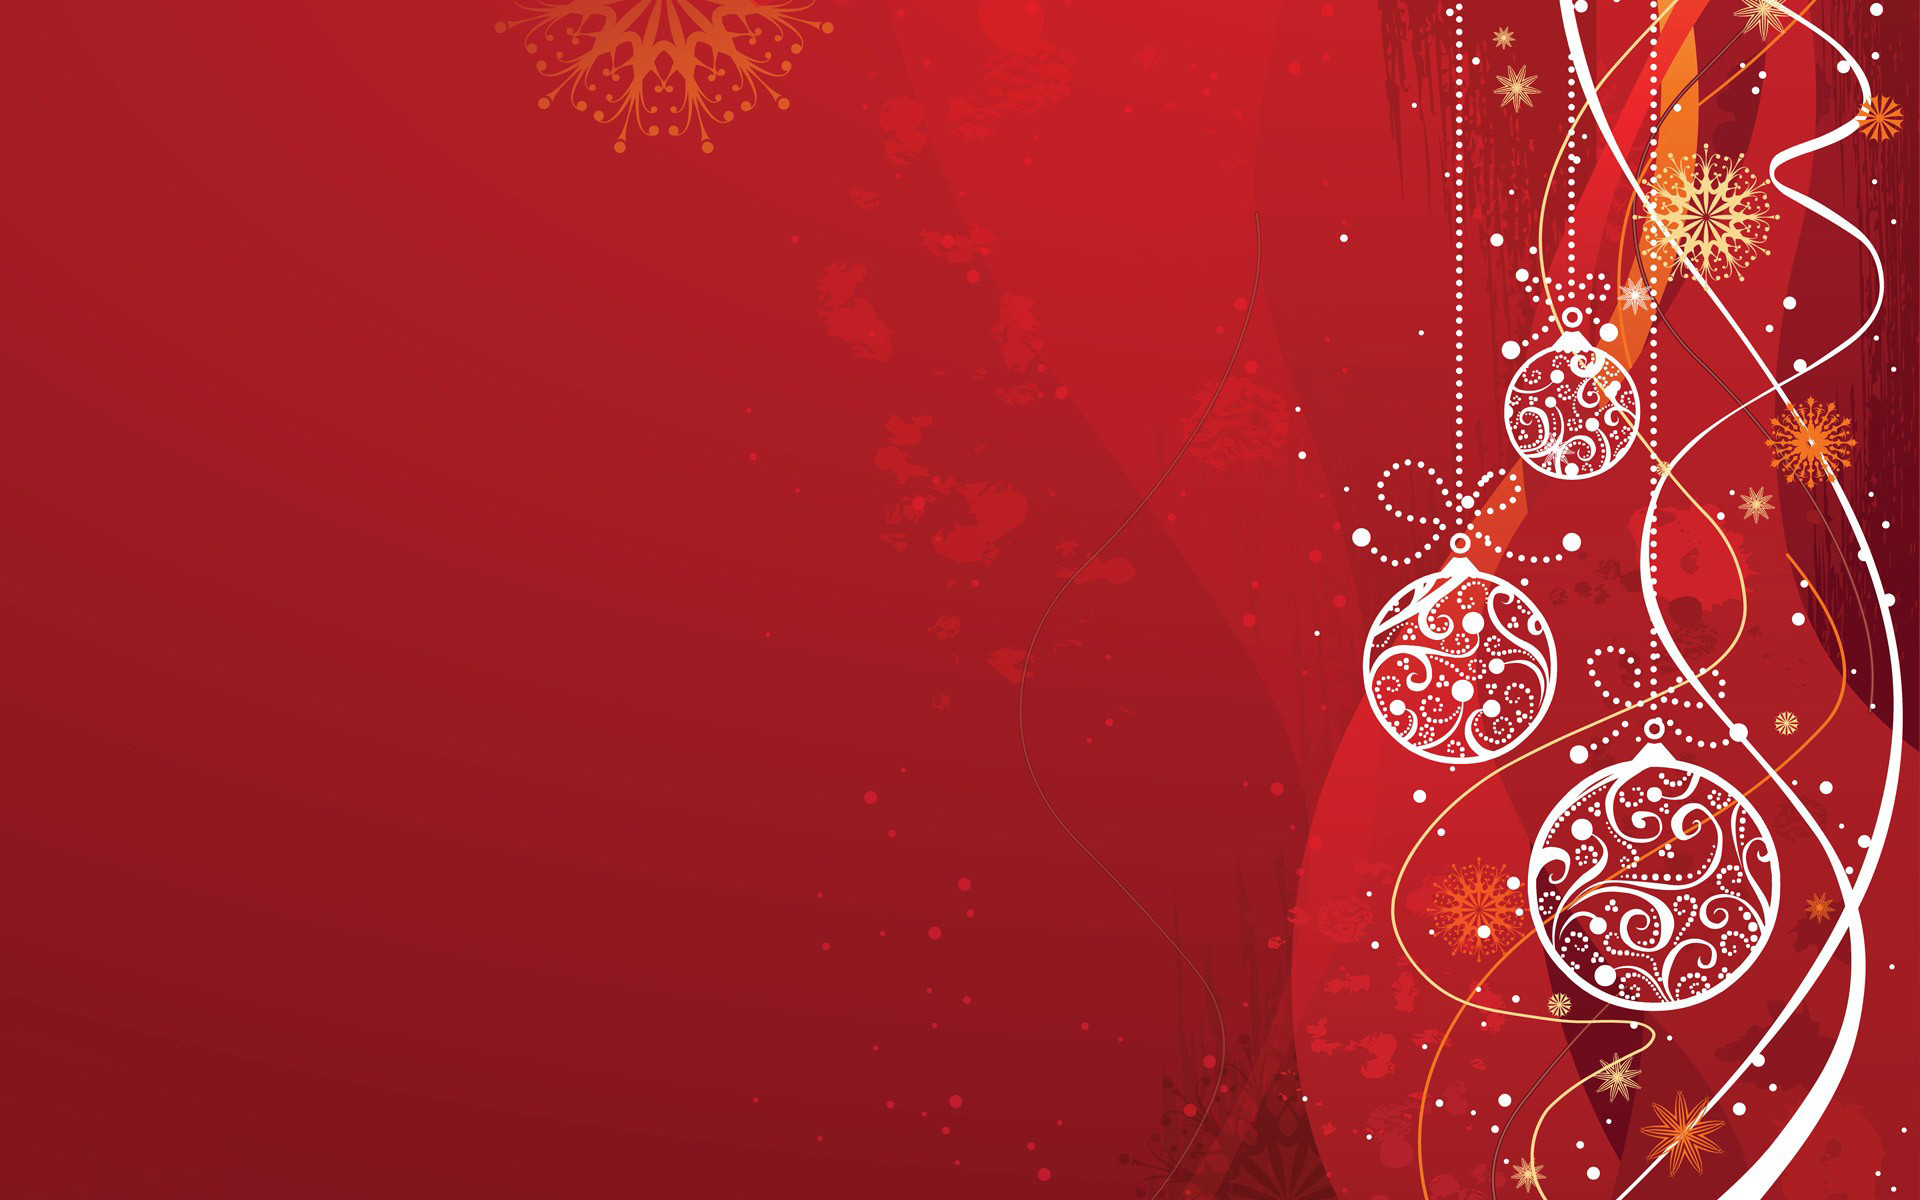 1920x1200 christmas-ornaments-wallpaper-8562-8888-hd-wallpapers.jpg (1920Ã1200) | as  | Pinterest | Holidays